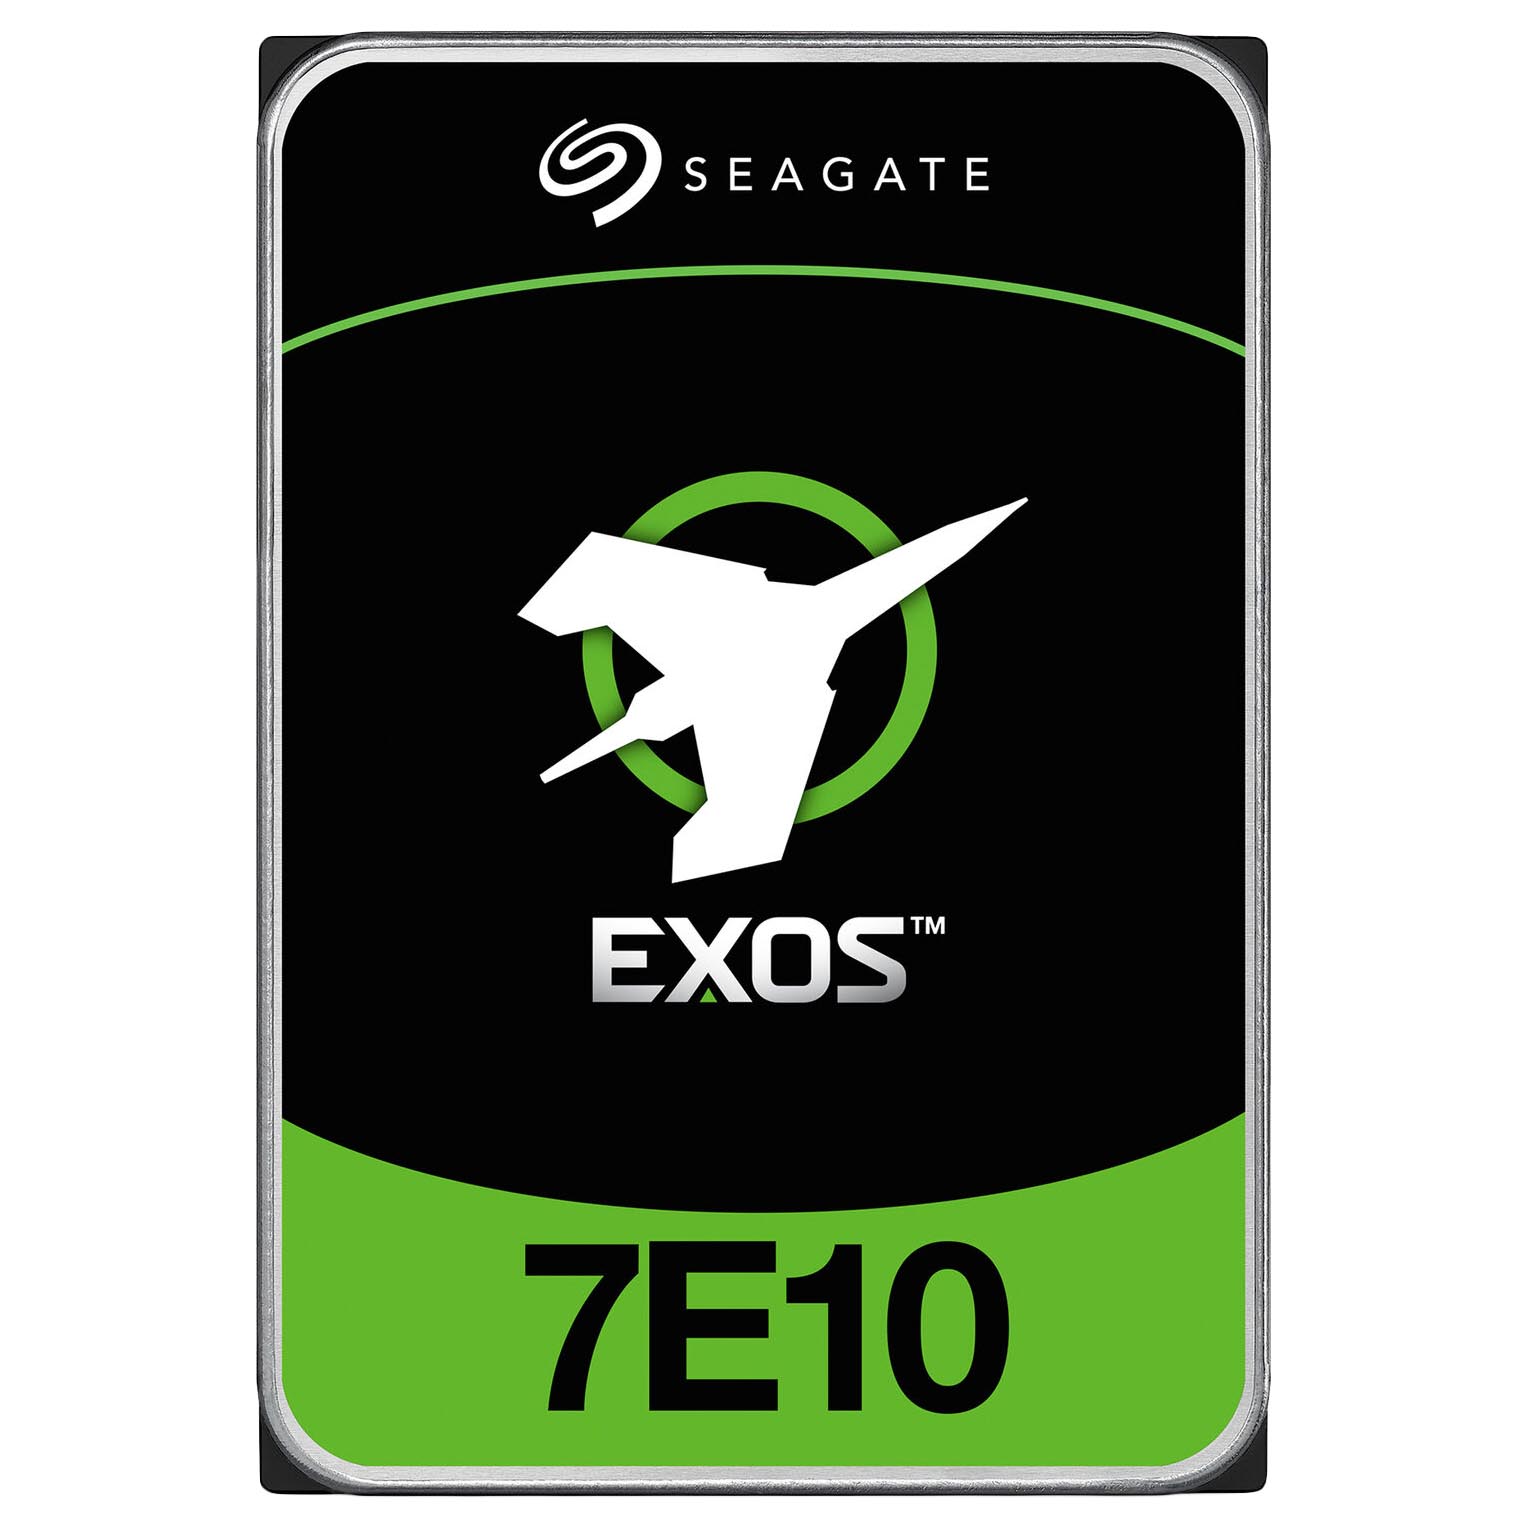 Внутренний жесткий диск Seagate Exos 7E10, ST2000NM001B, 2 Тб жесткий диск seagate st2000nm001b